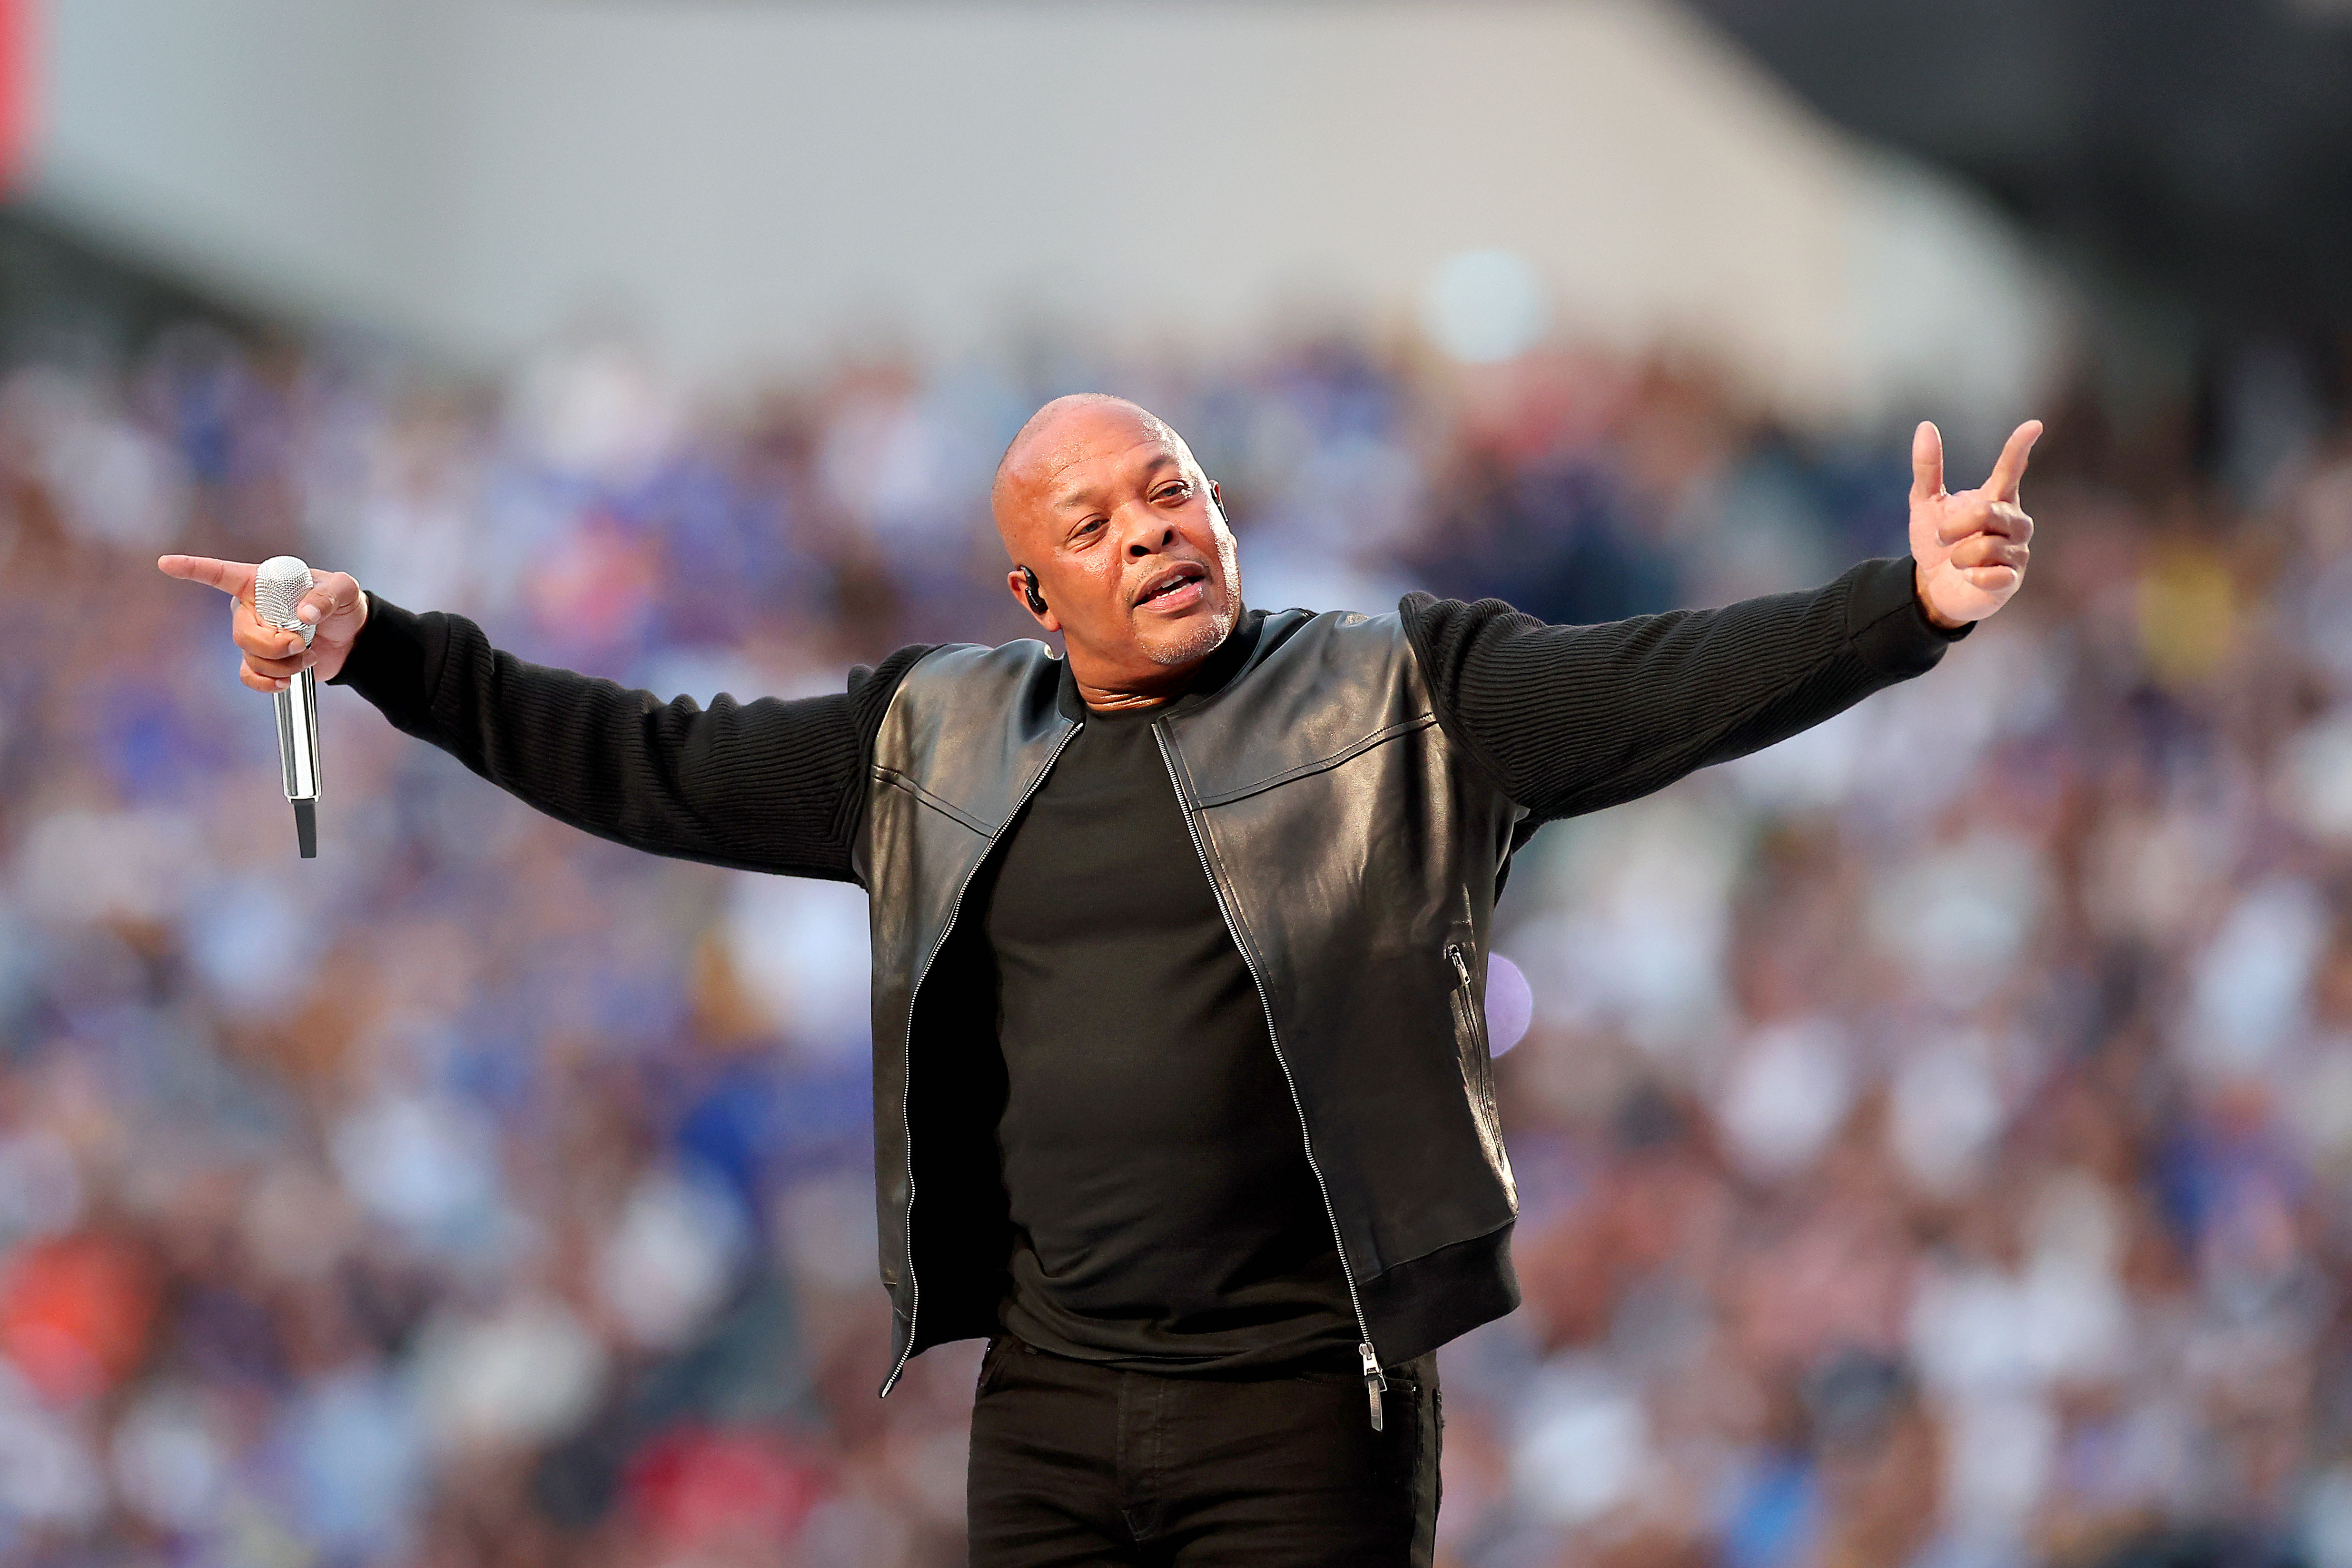 Dr. Dre performs during the Pepsi Super Bowl LVI Halftime Show at SoFi Stadium